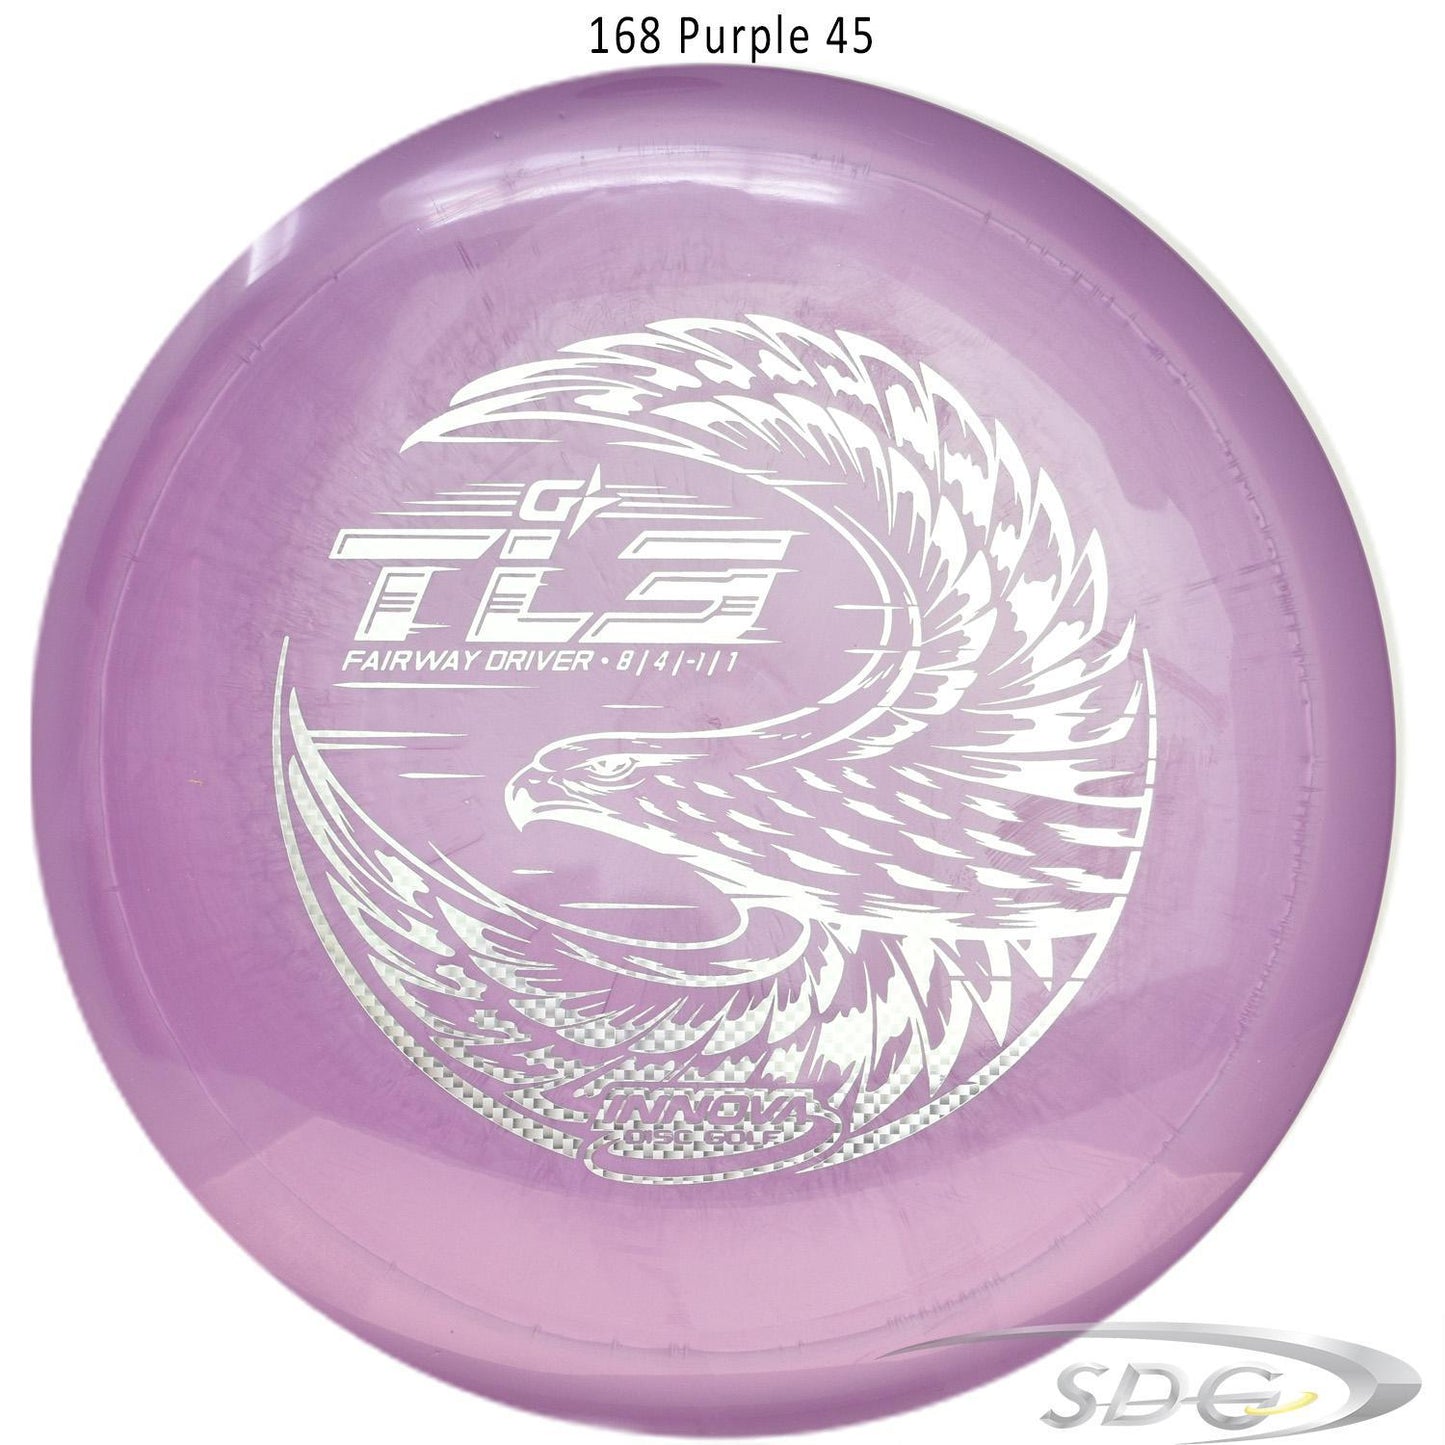 innova-gstar-tl3-disc-golf-fairway-driver 168 Purple 45 